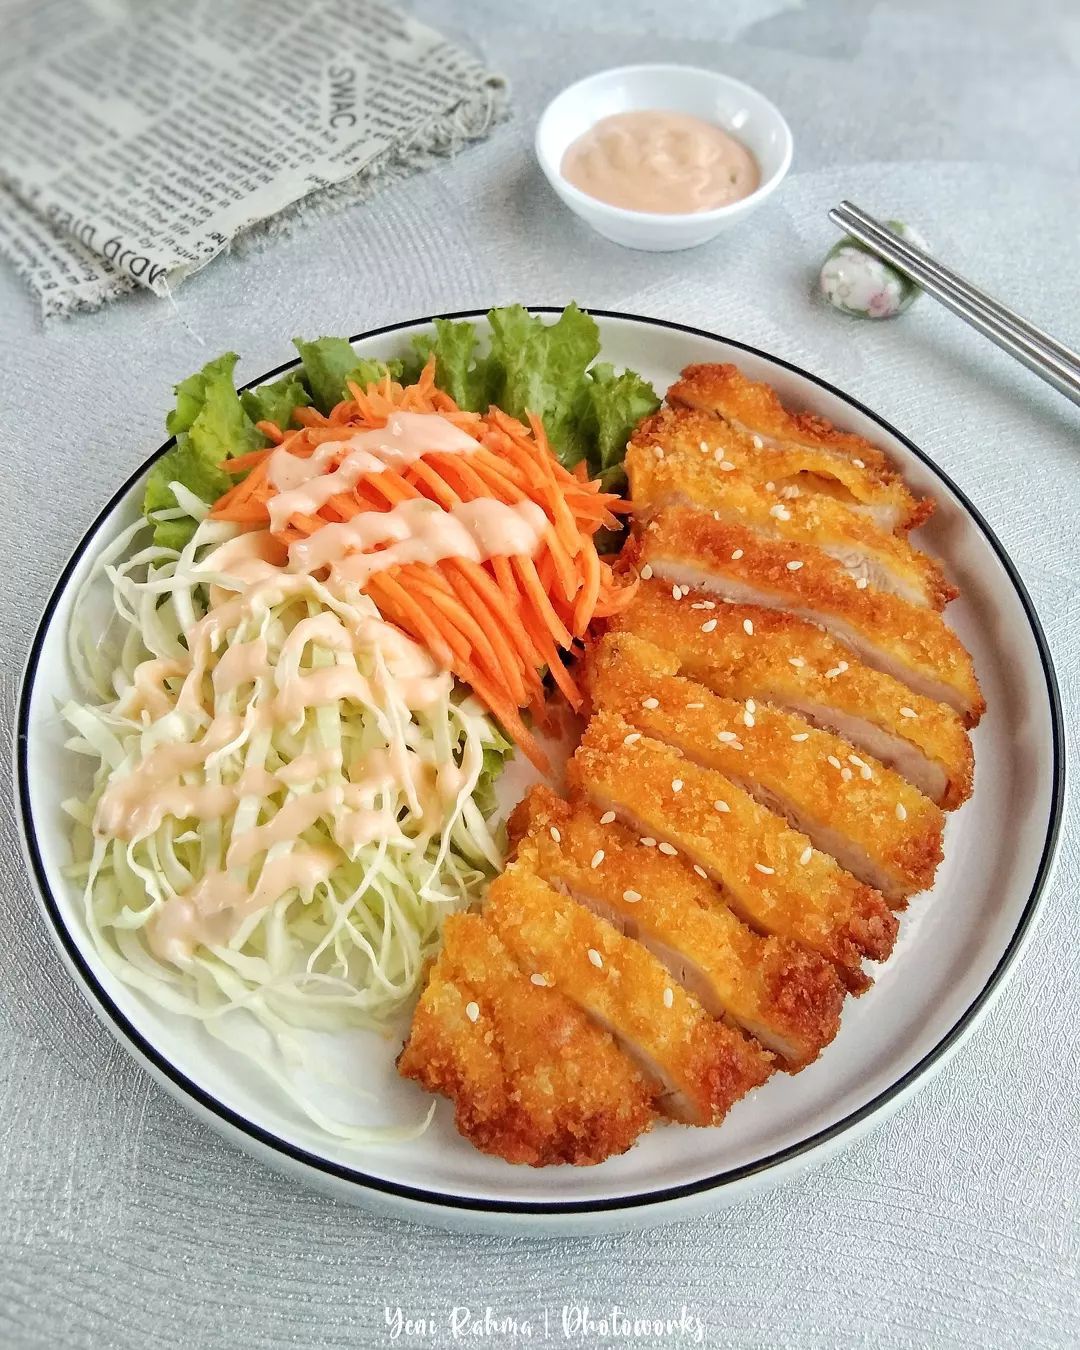 Resep Chicken Katsu Oatmeal